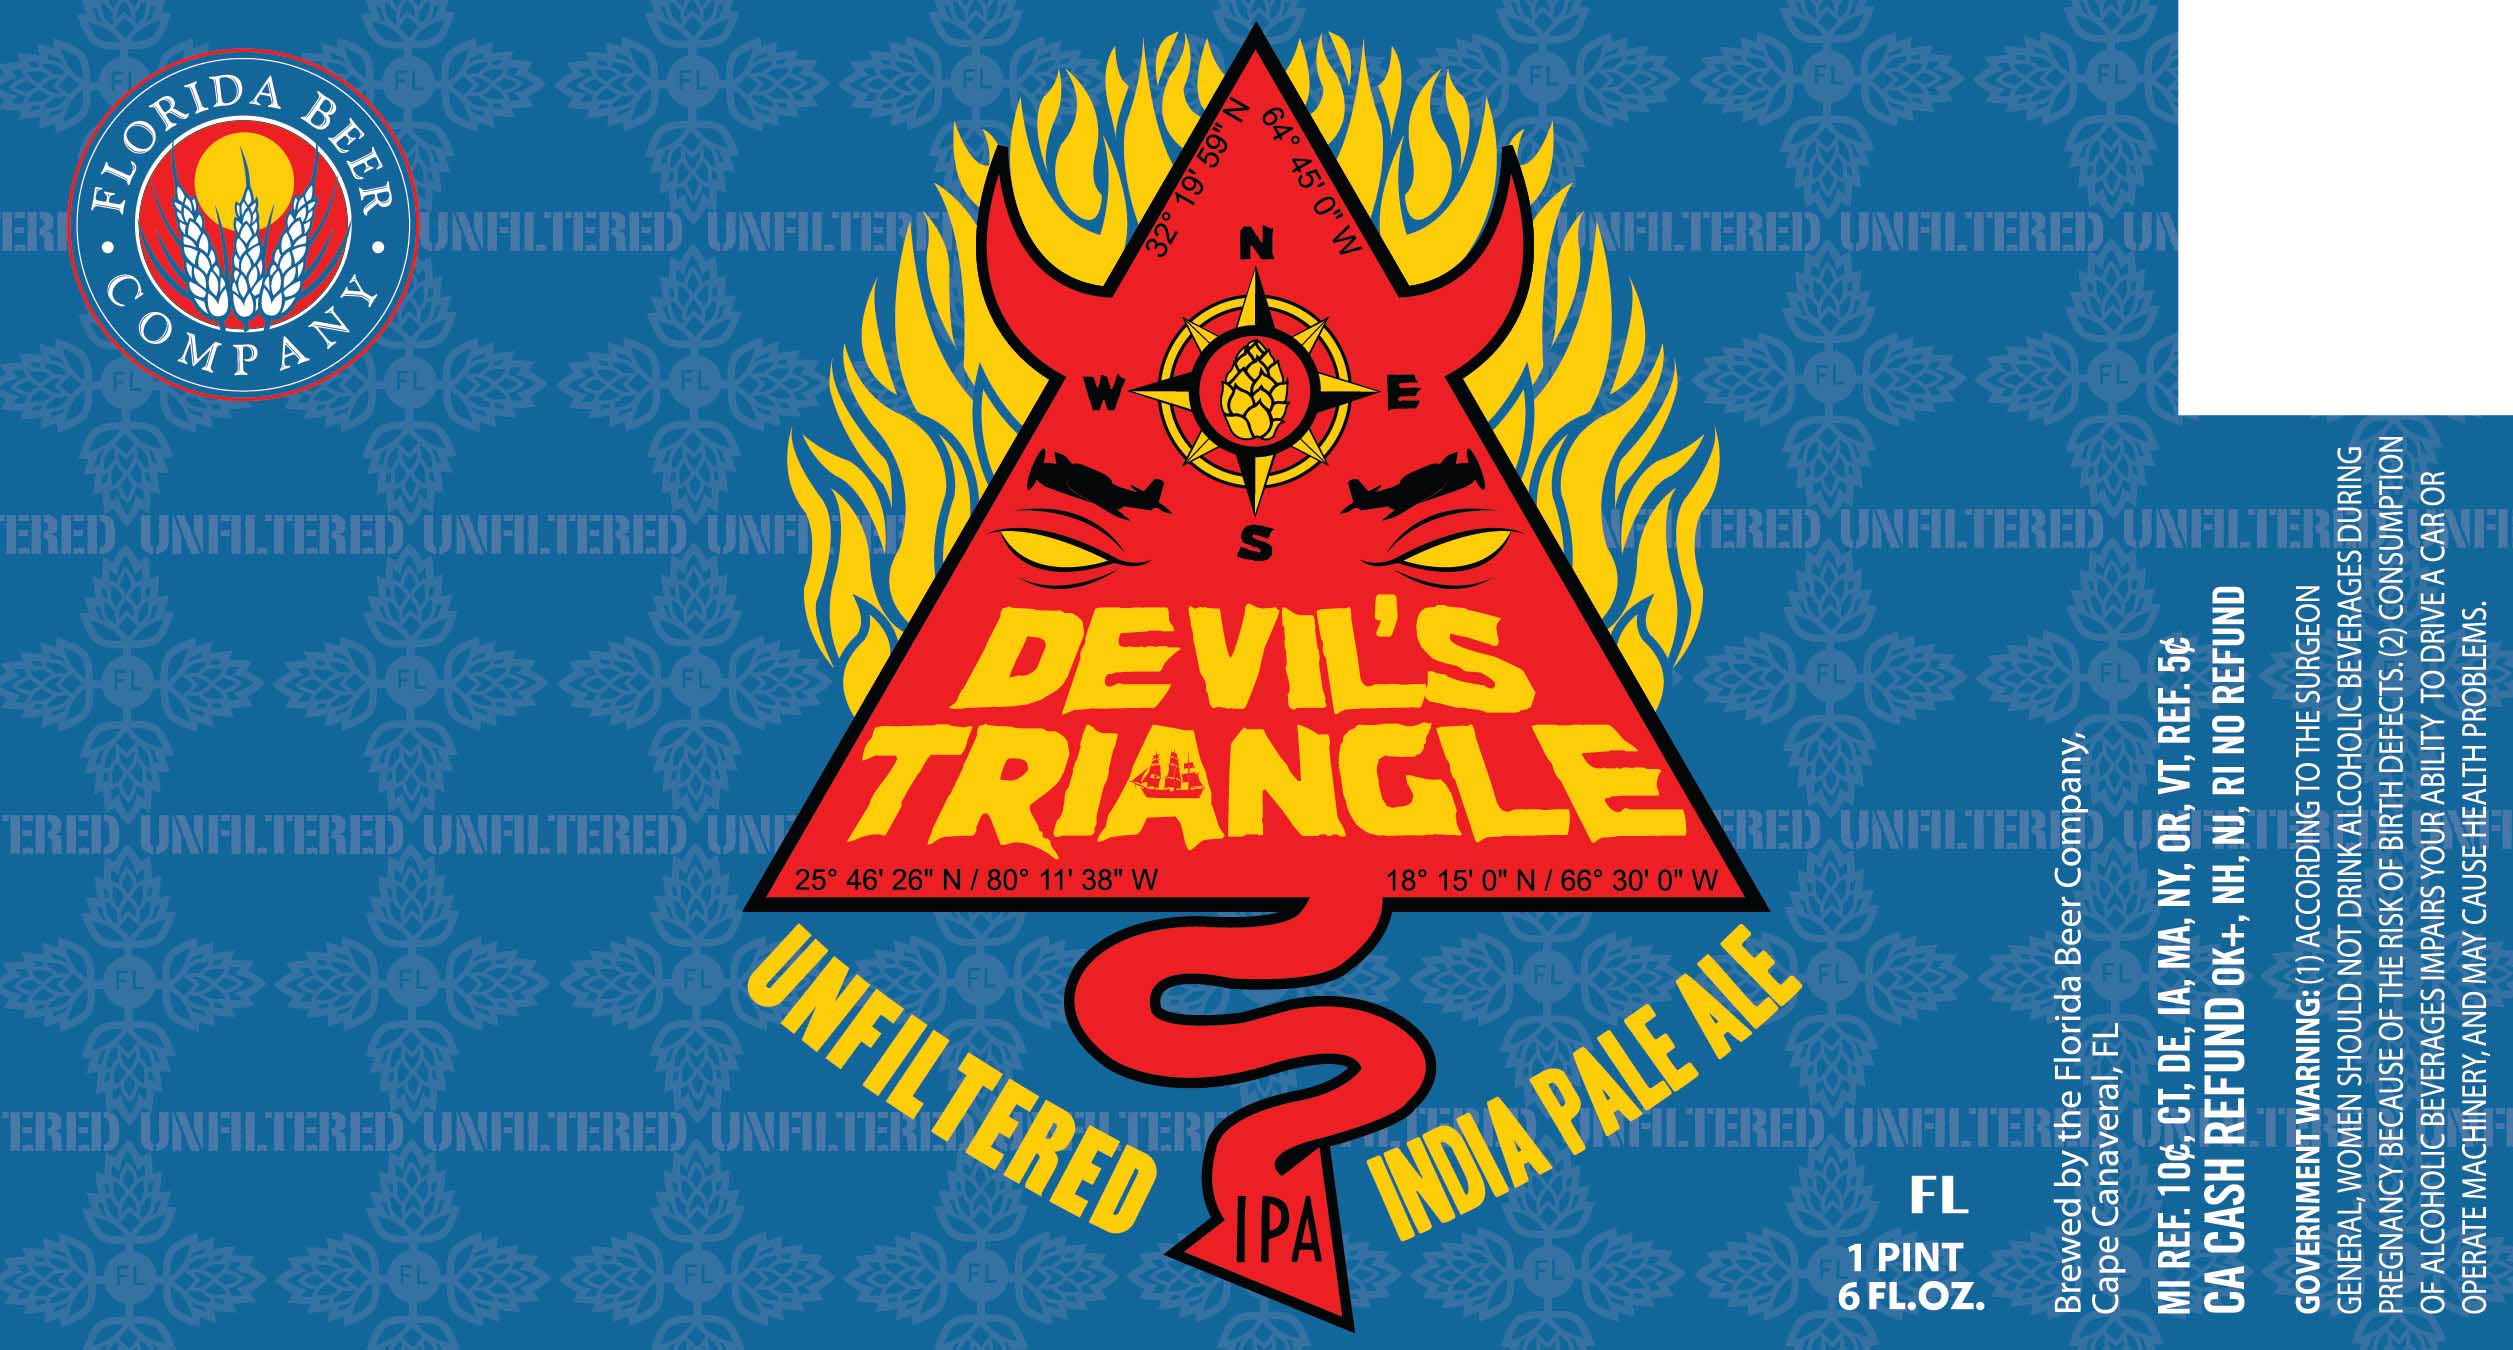 Florida Beer Company Devil's Triangle